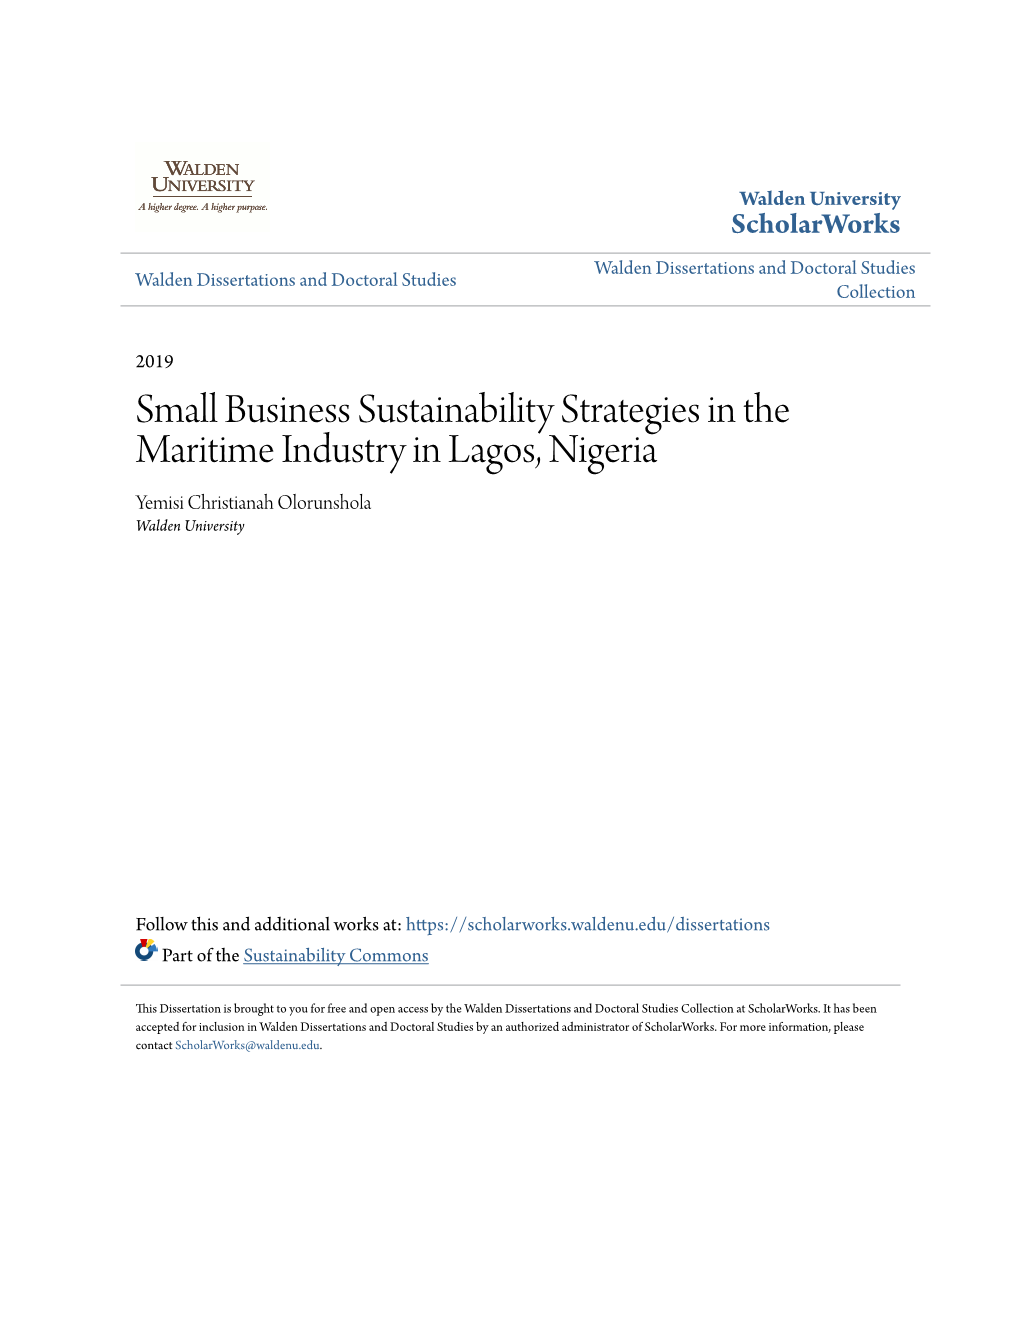 Small Business Sustainability Strategies in the Maritime Industry in Lagos, Nigeria Yemisi Christianah Olorunshola Walden University